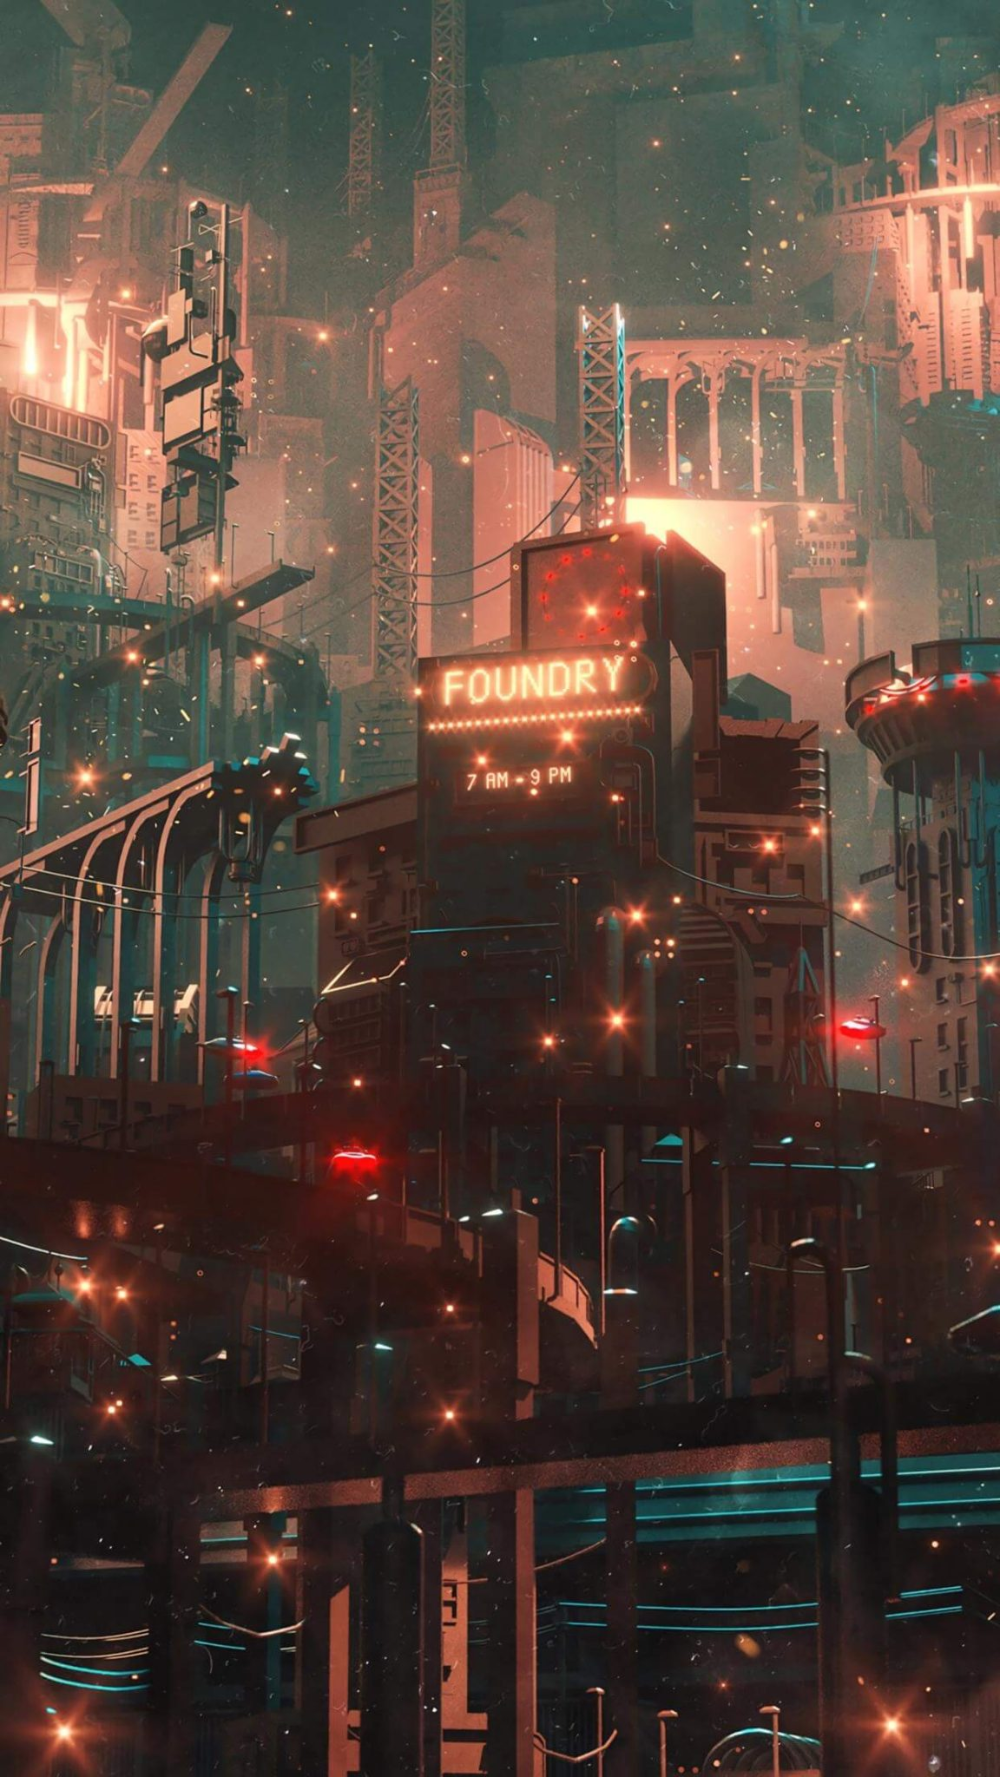 Download Retro Night City Cyberpunk 2077 Iphone Wallpaper